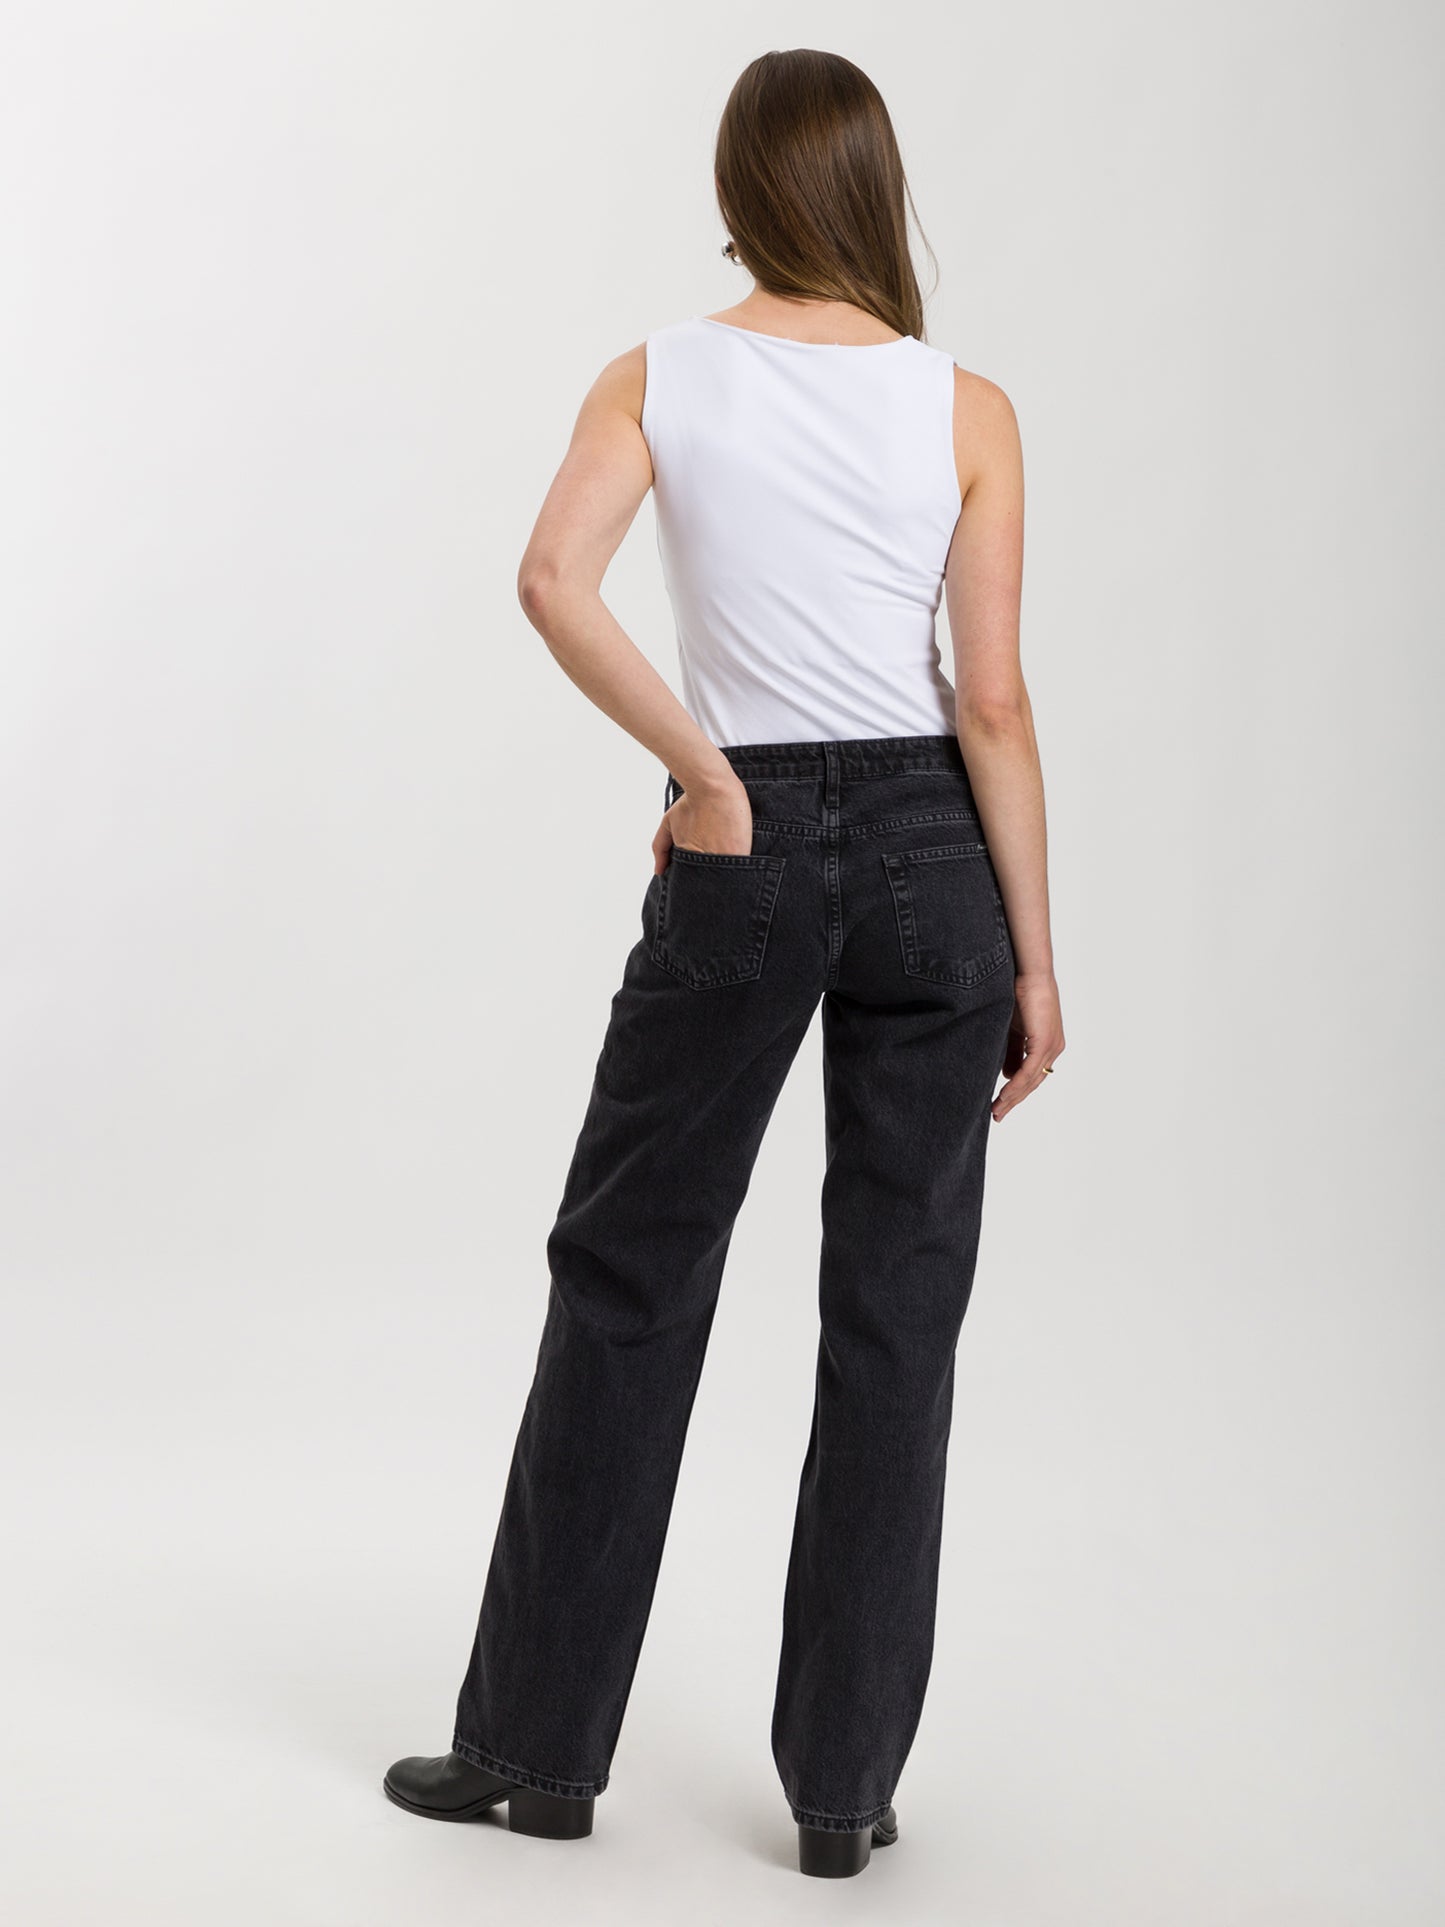 Lily women's jeans straight fit low waist in dark grey